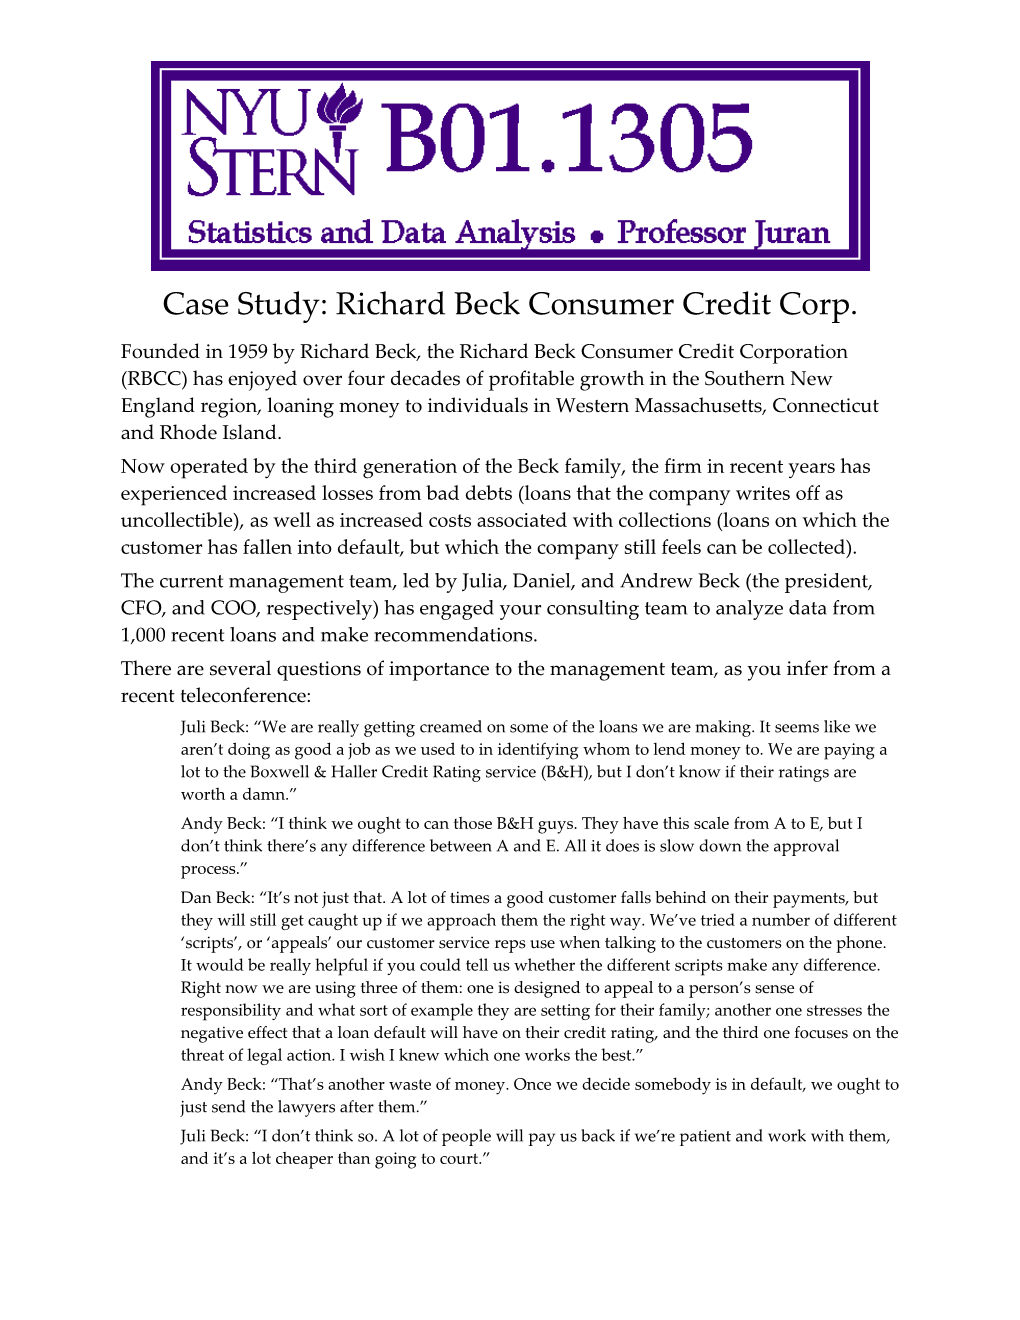 Case Study: Richard Beck Consumer Credit Corp